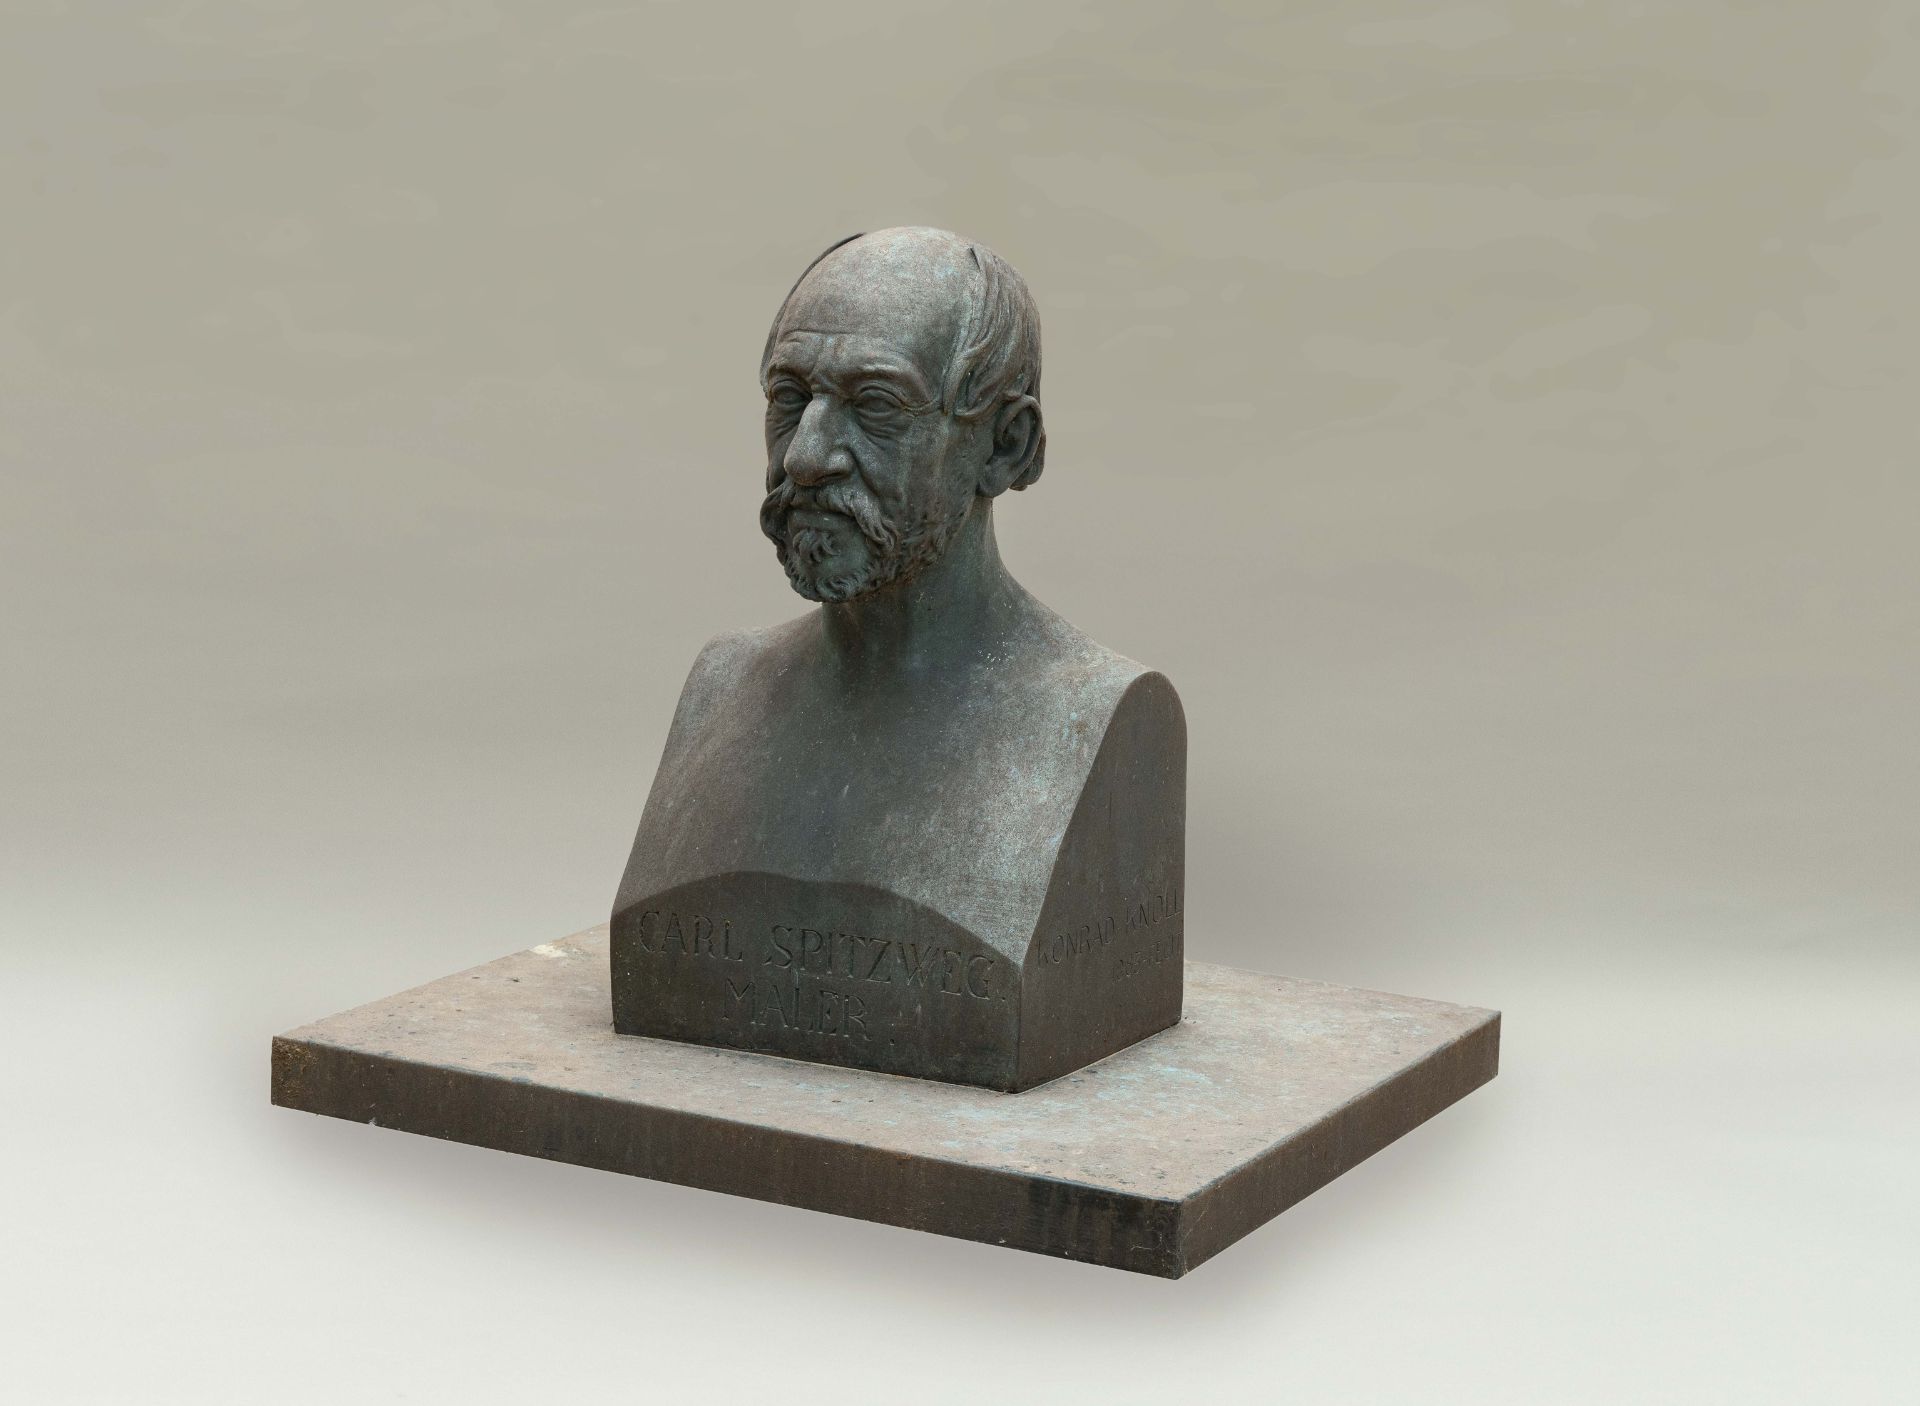 Konrad Knoll, Portrait bust of Carl Spitzweg.Zinc cast. 1883. 59.3 x 33 x 27.9 cm (without